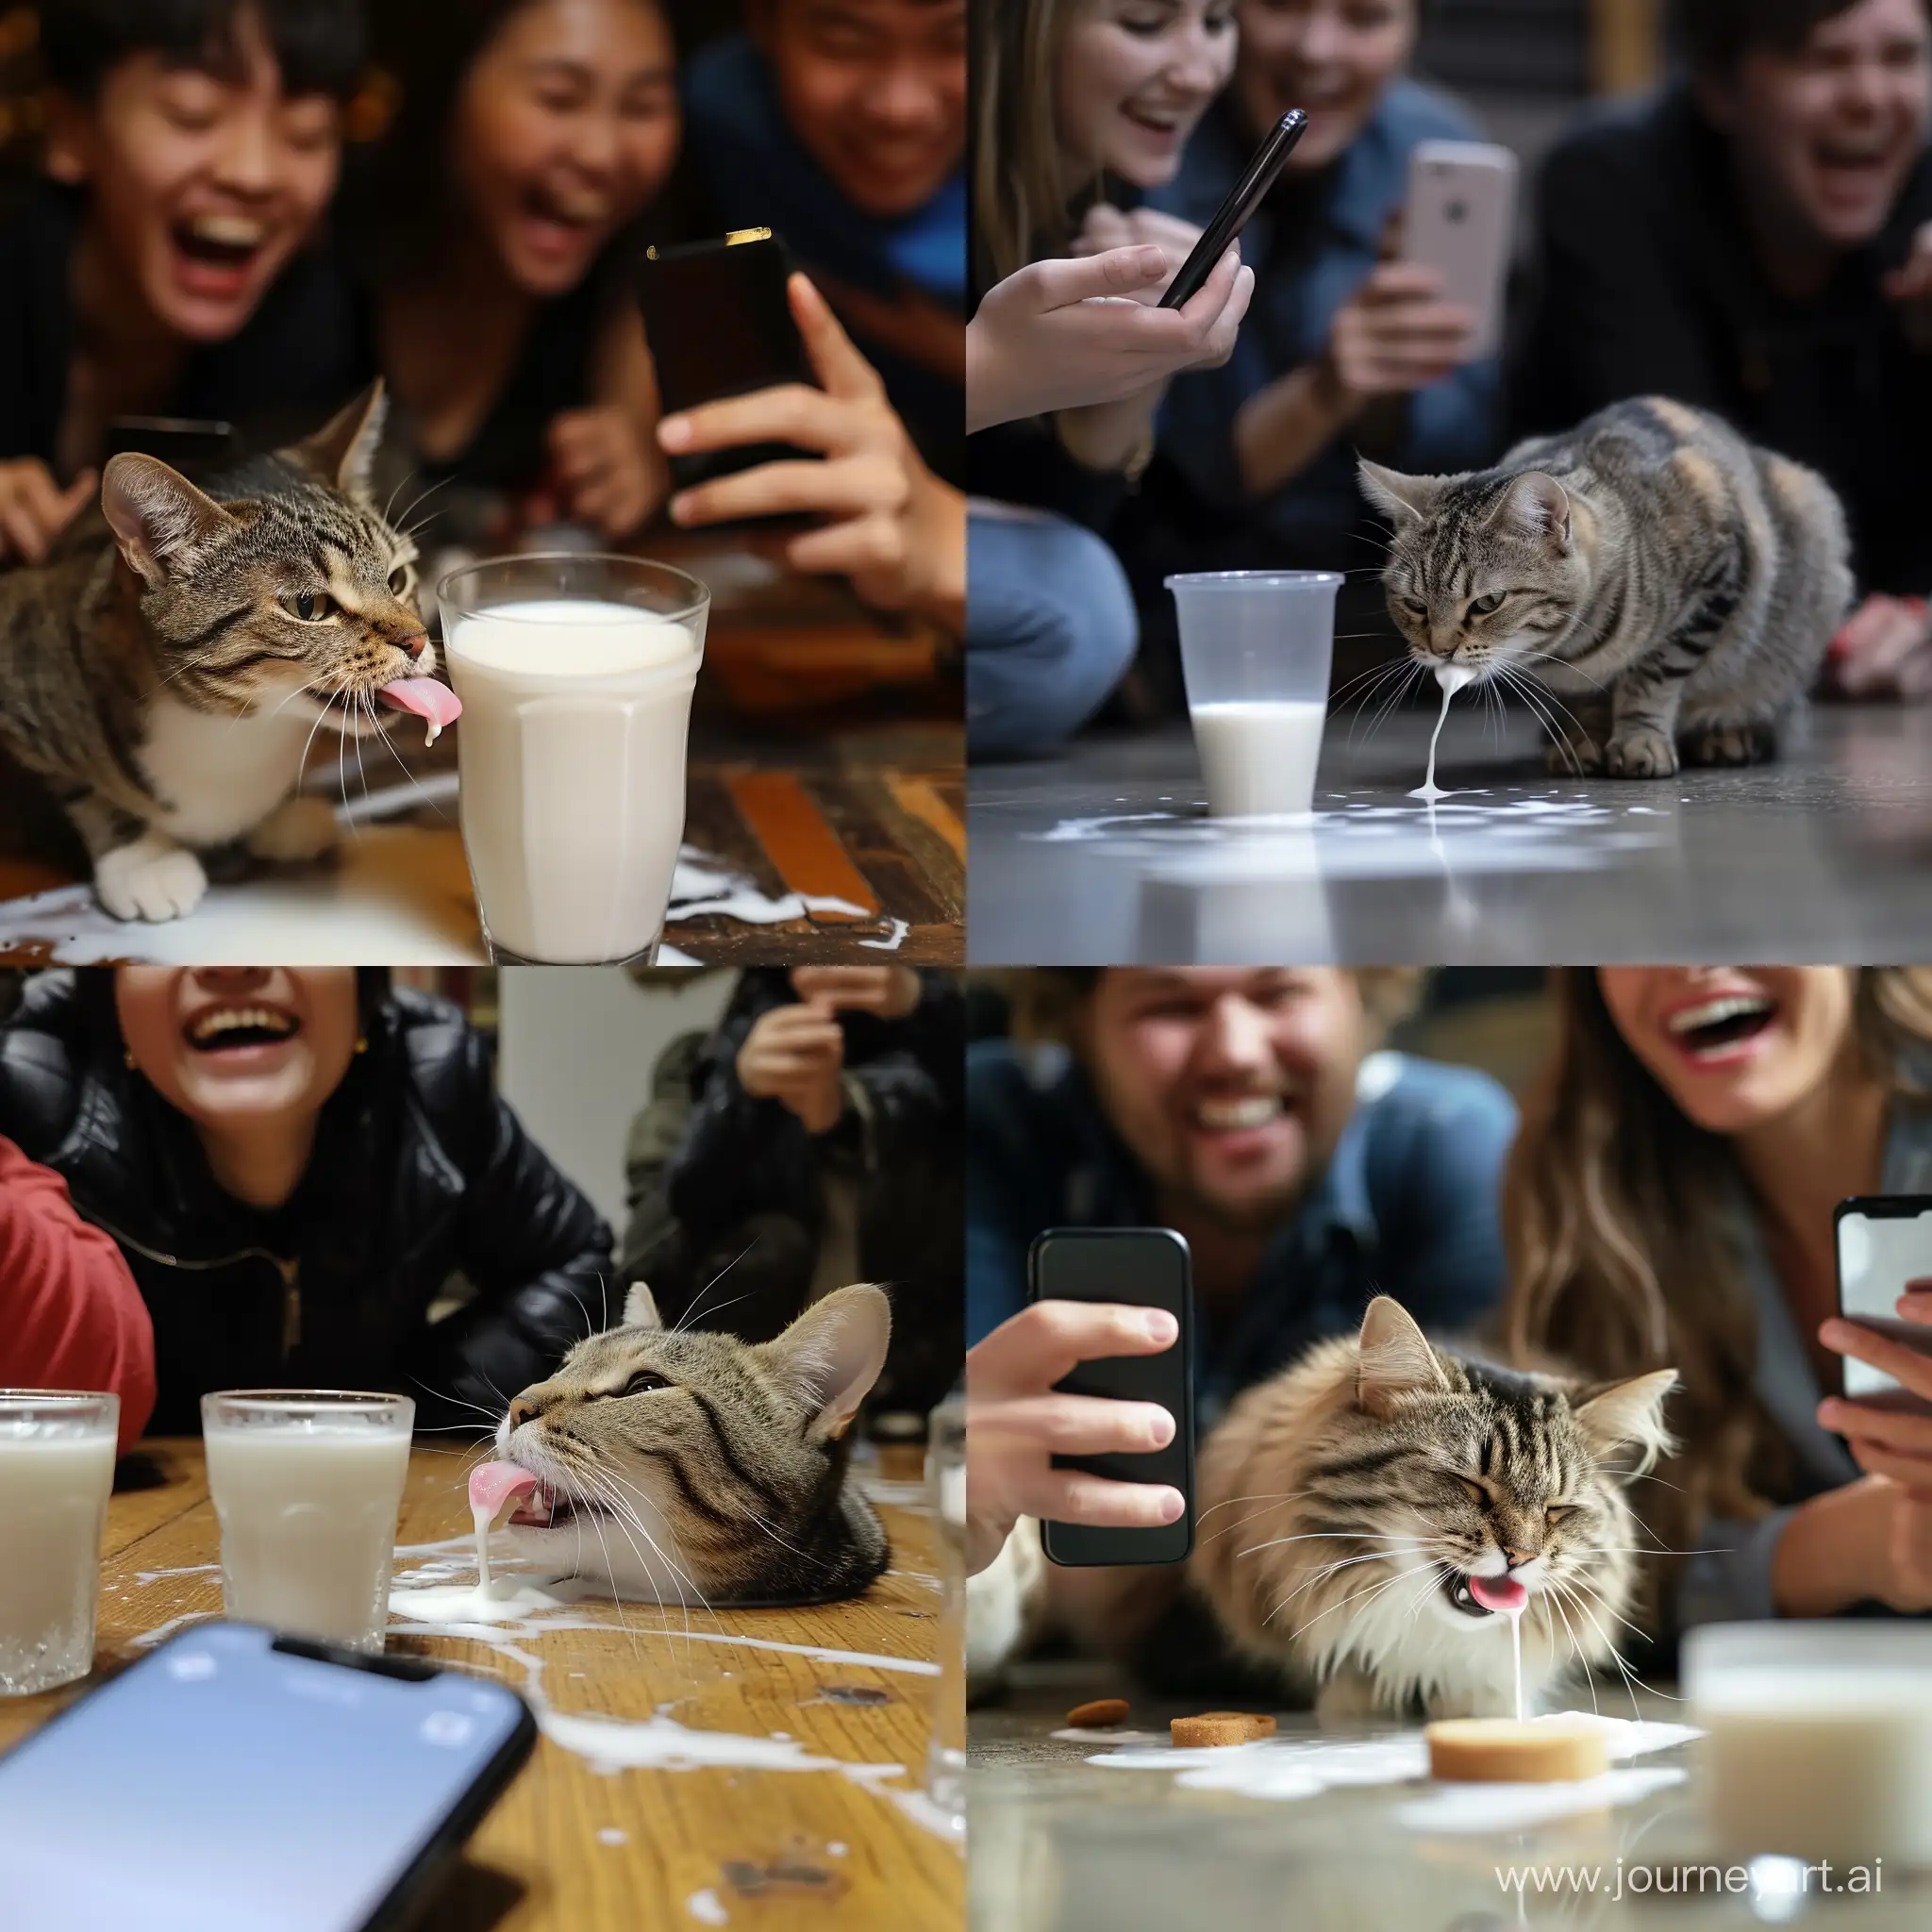 Cat licks milk from the floor, people around laugh, photo on phone::